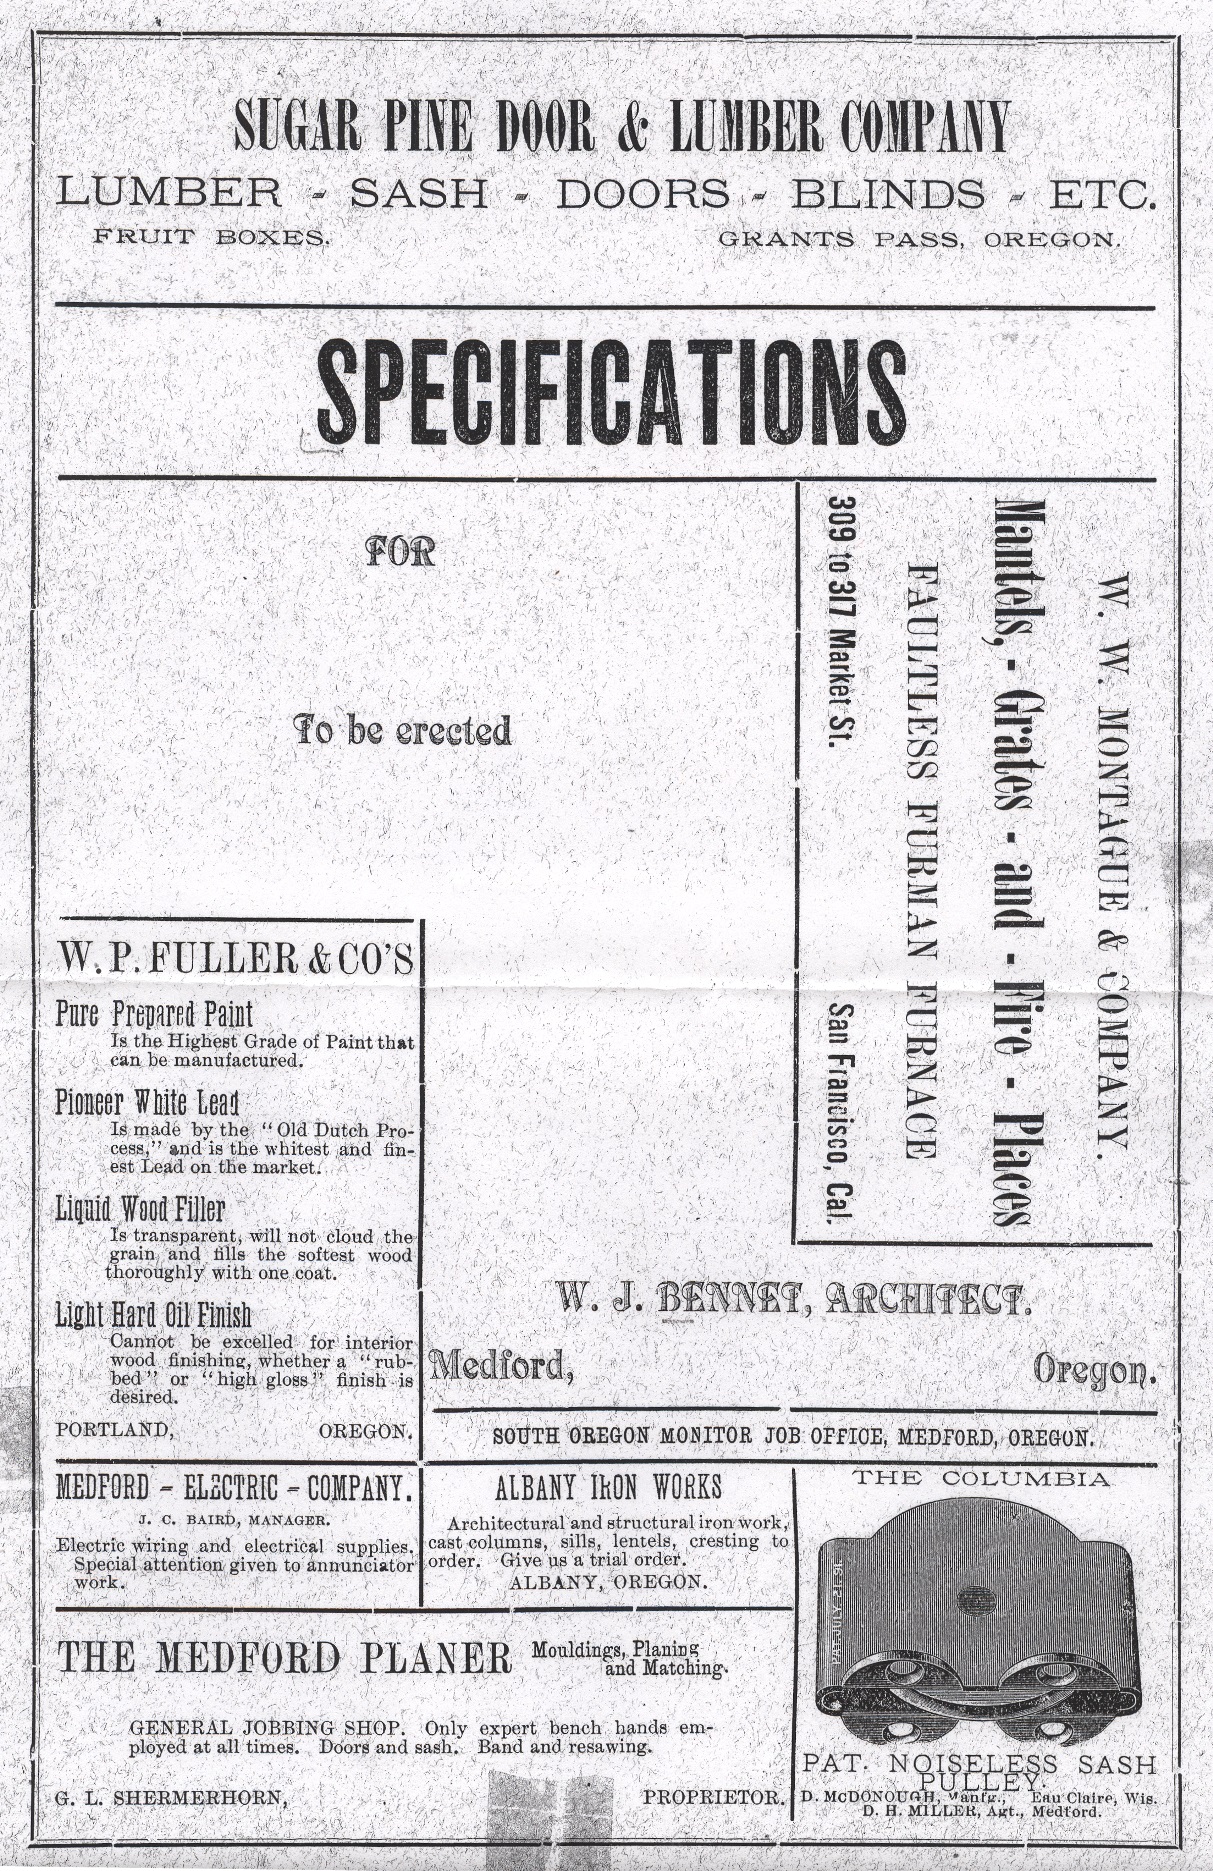 W. J. Bennet specifications cover, 1895-96, Medford, Oregon